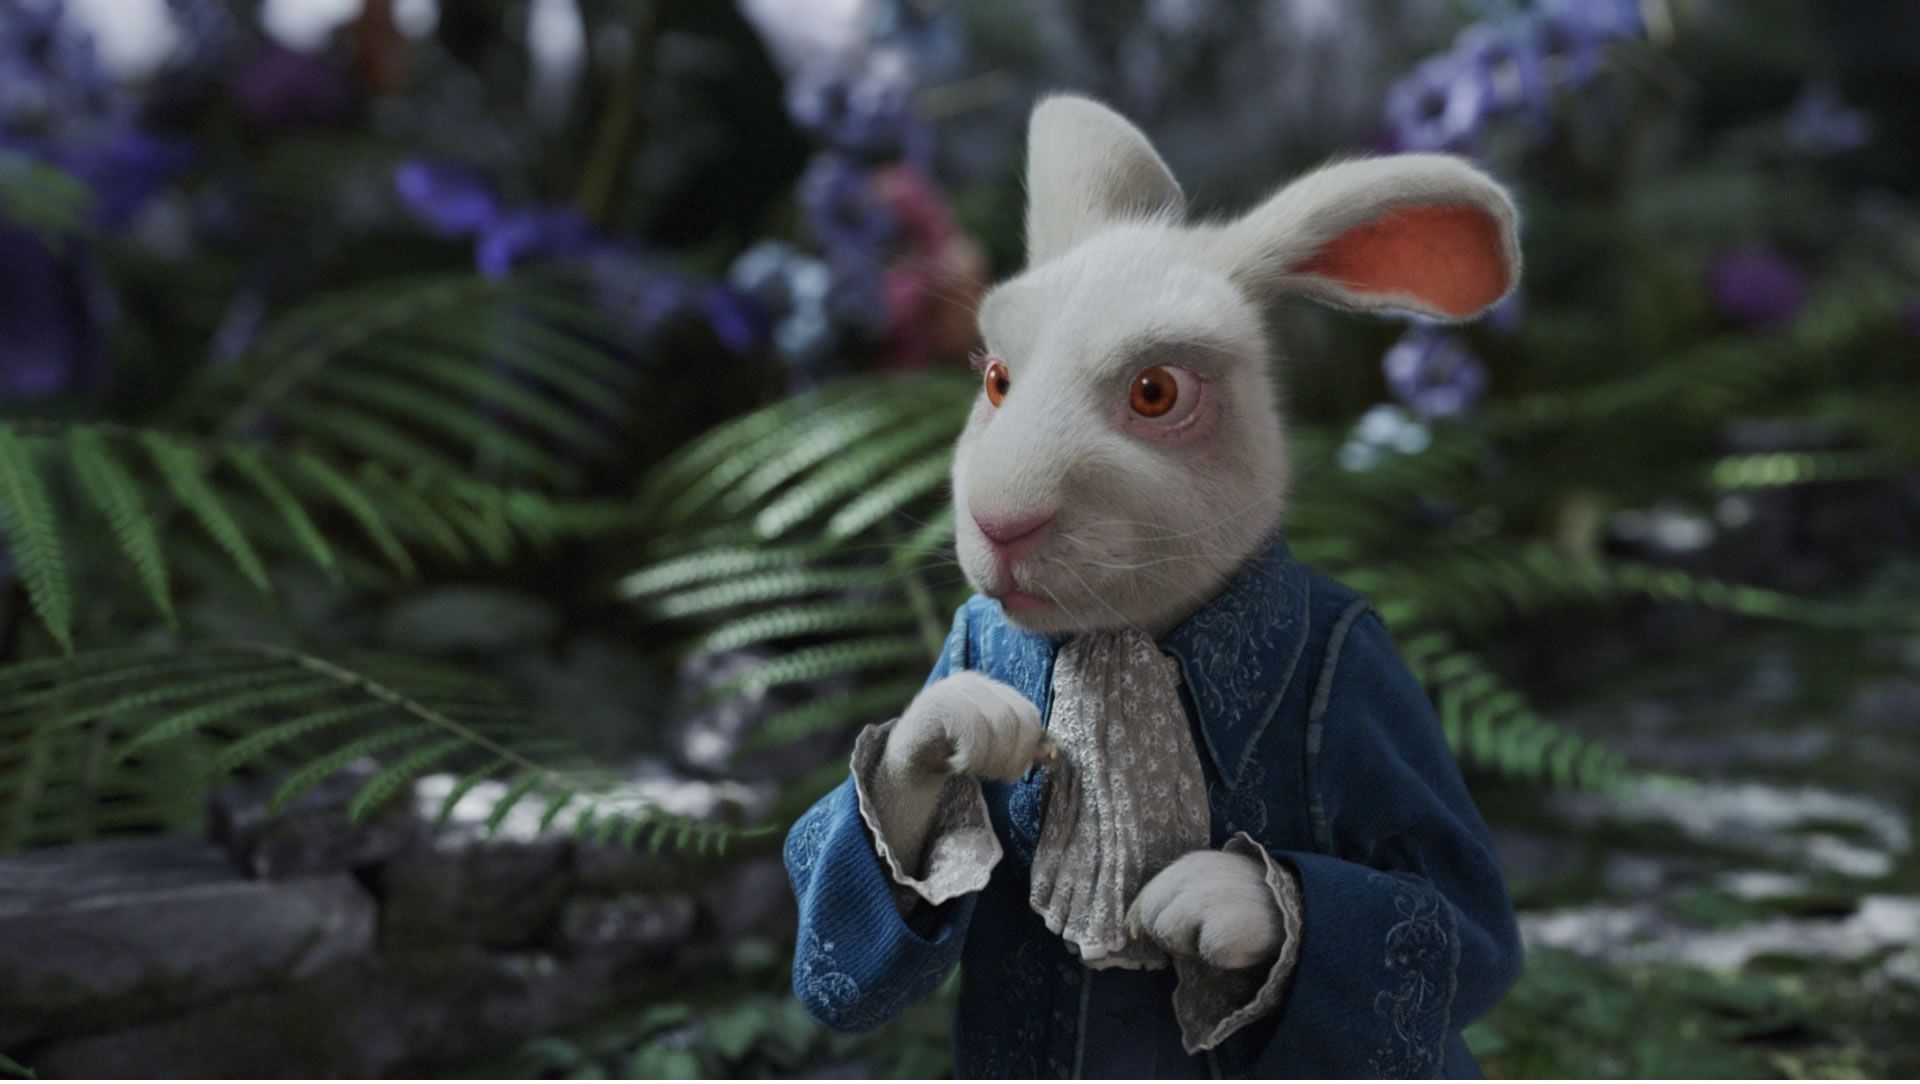 Michael Sheen as the White Rabbit in Alice in Wonderland